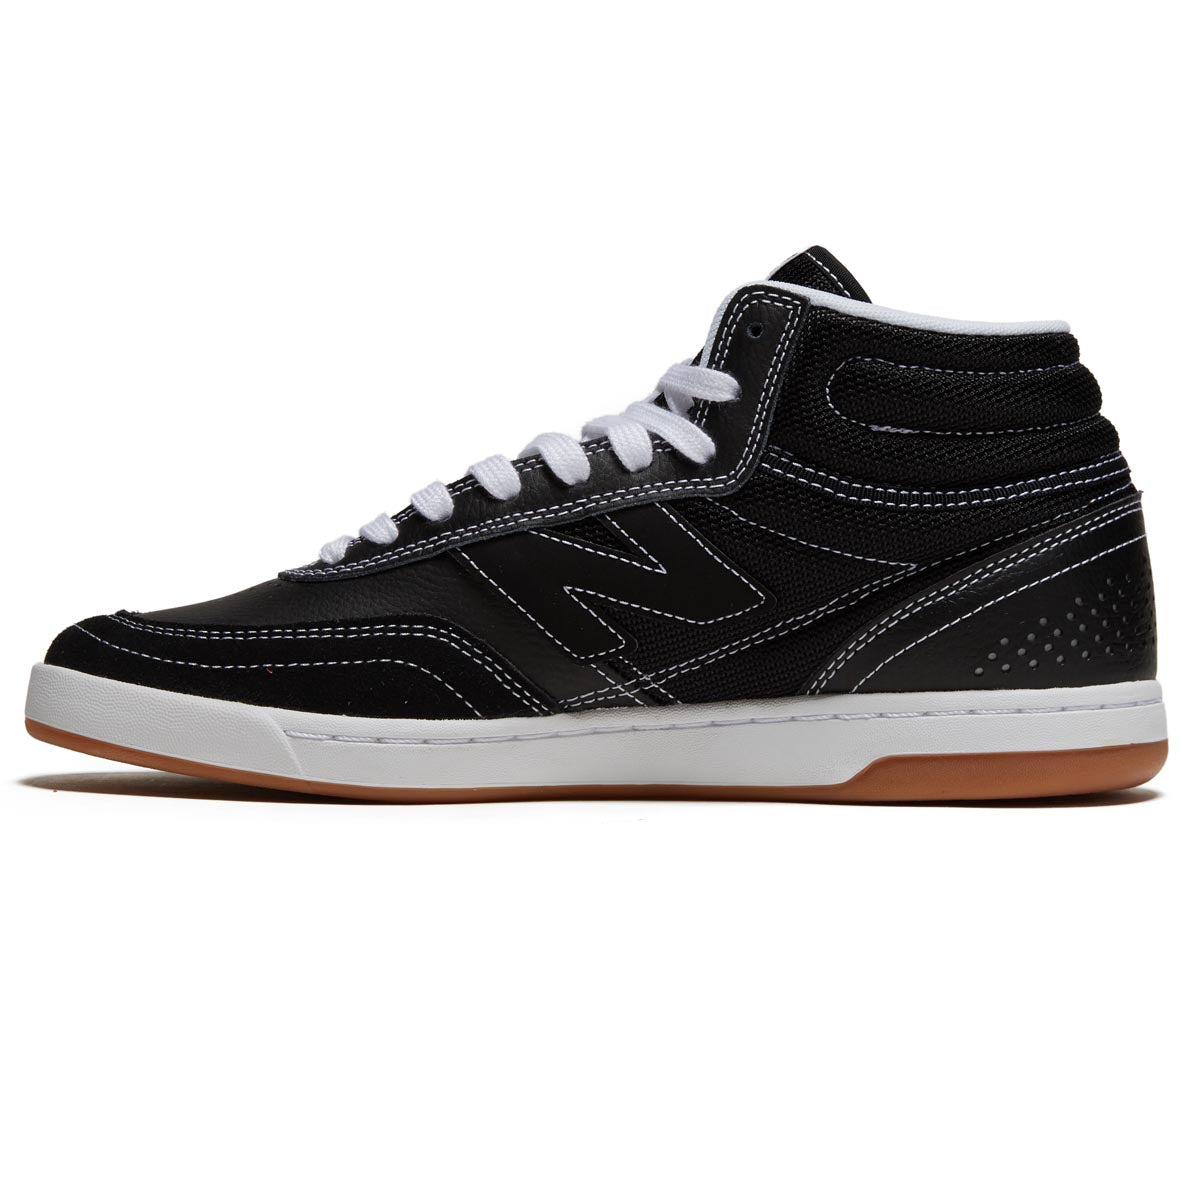 New Balance 440 High V2 Shoes - Black image 2